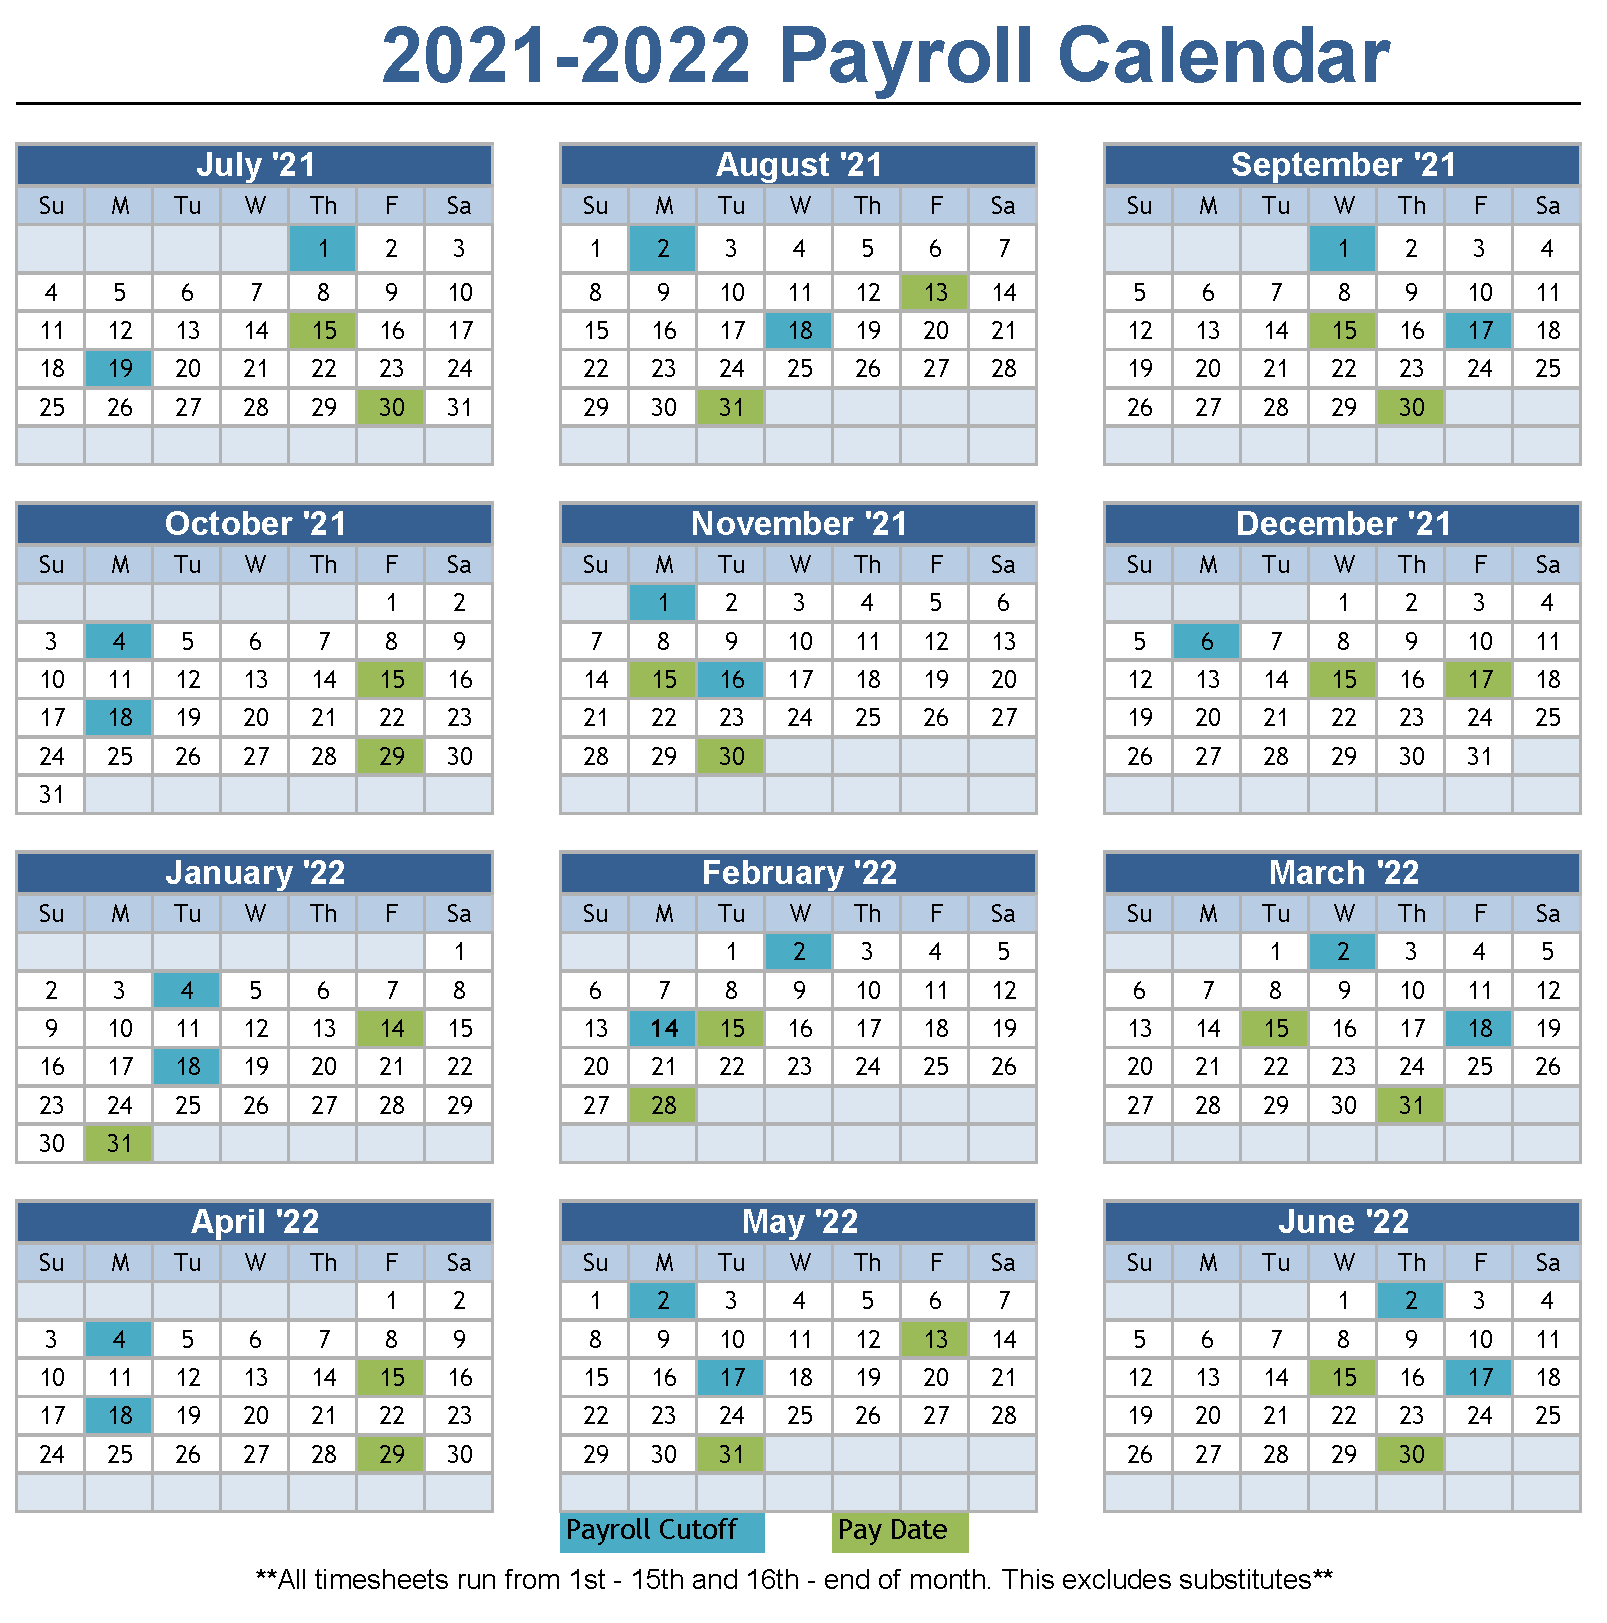 Edward Jones Payroll Calendar 2022